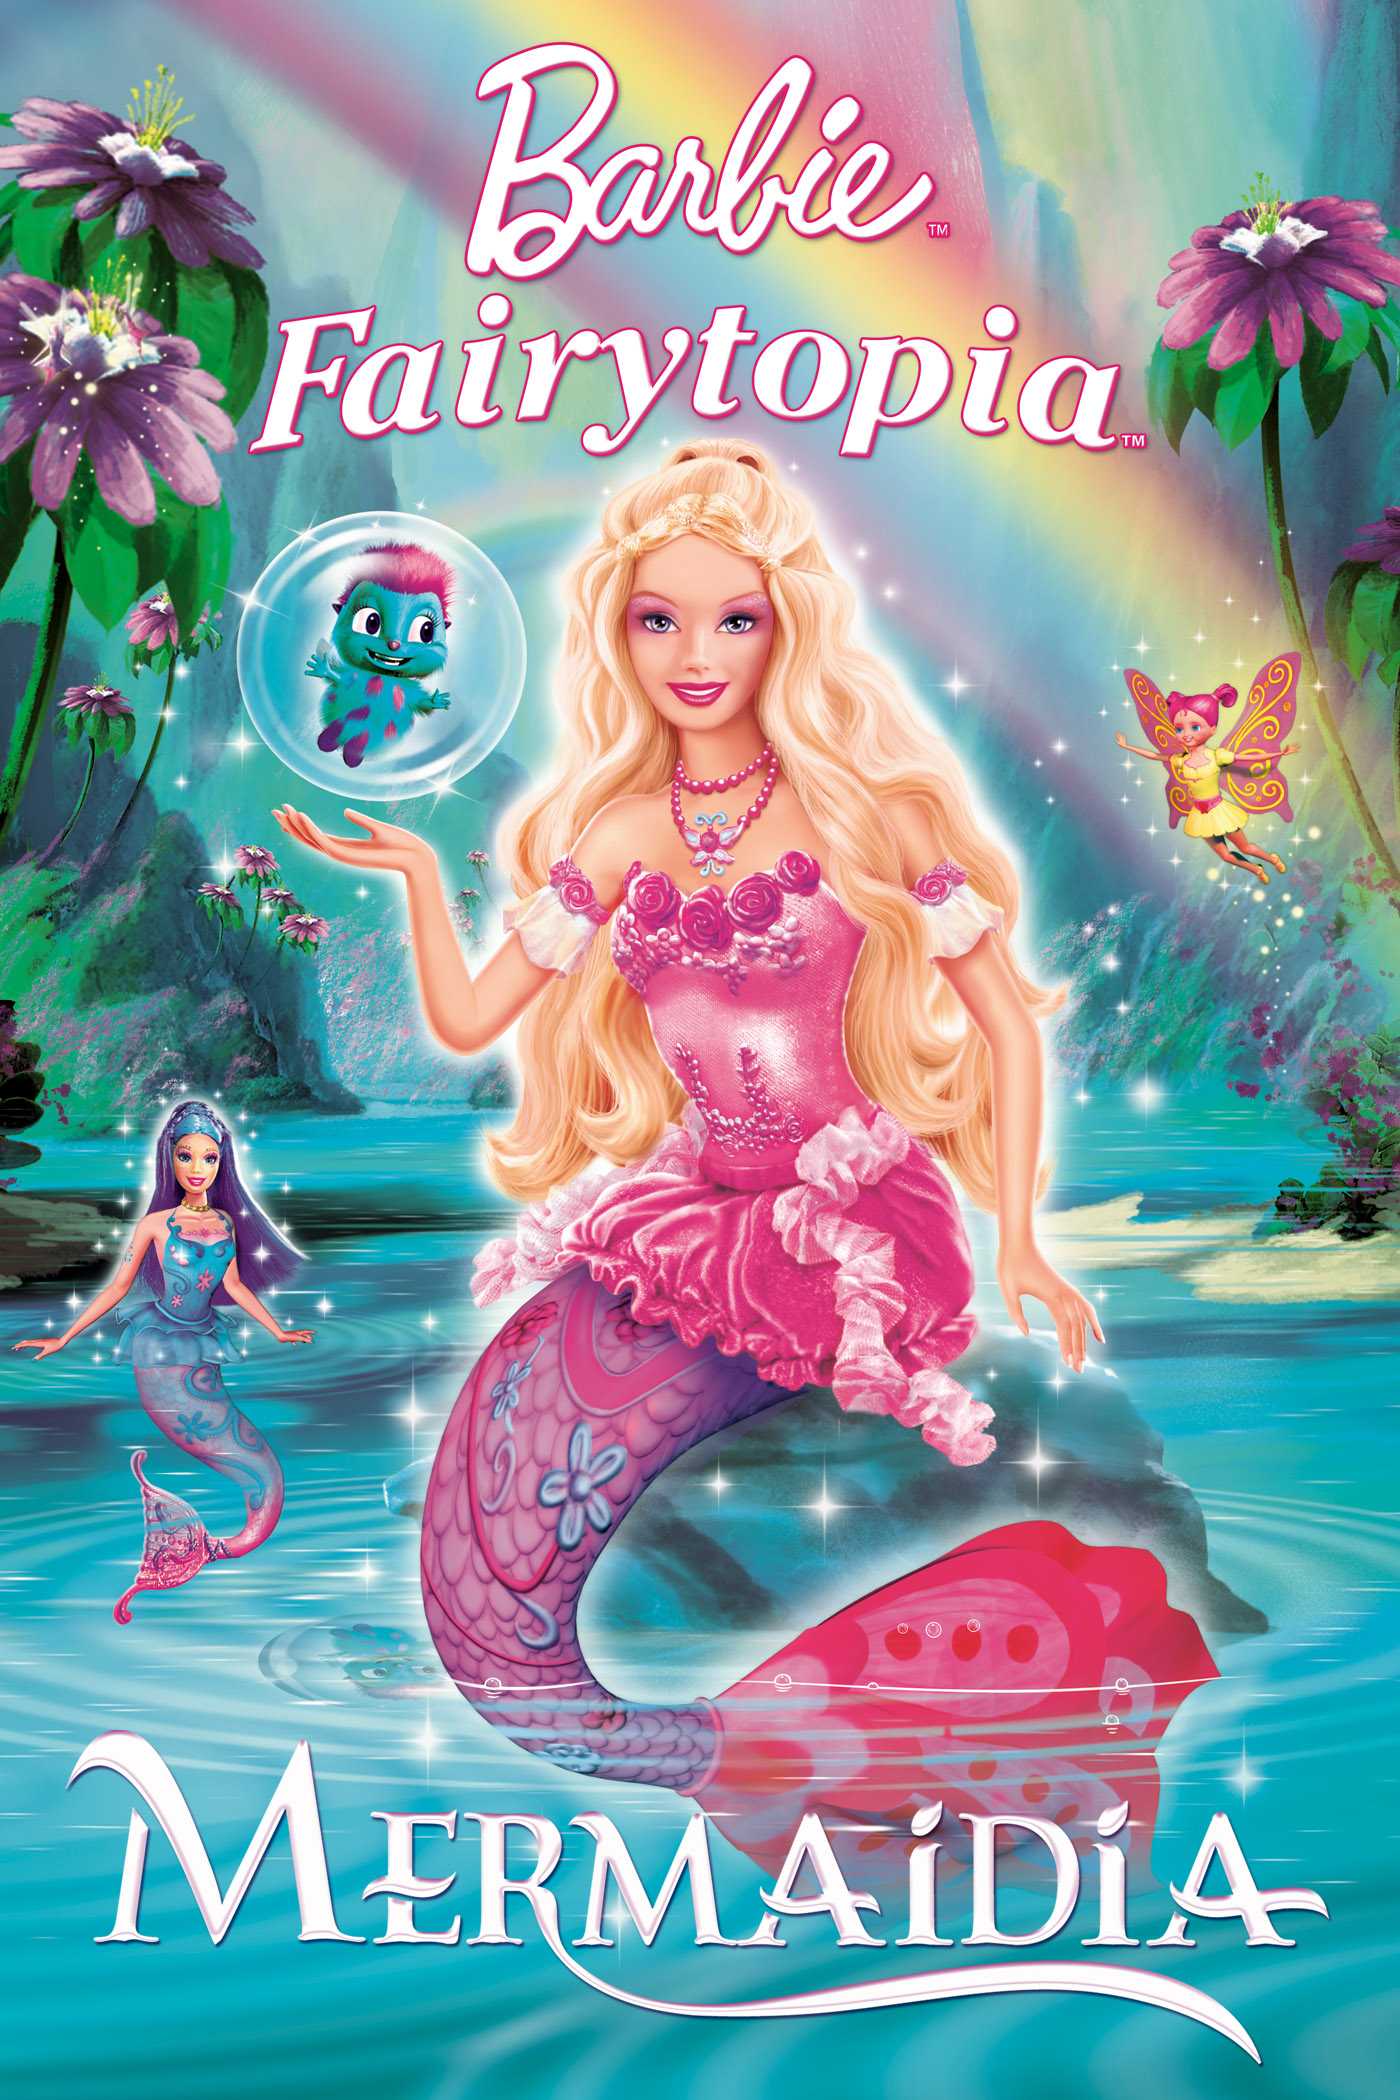 Barbie Fairytopia: Mermaidia | Barbie Movies Wiki | FANDOM ...